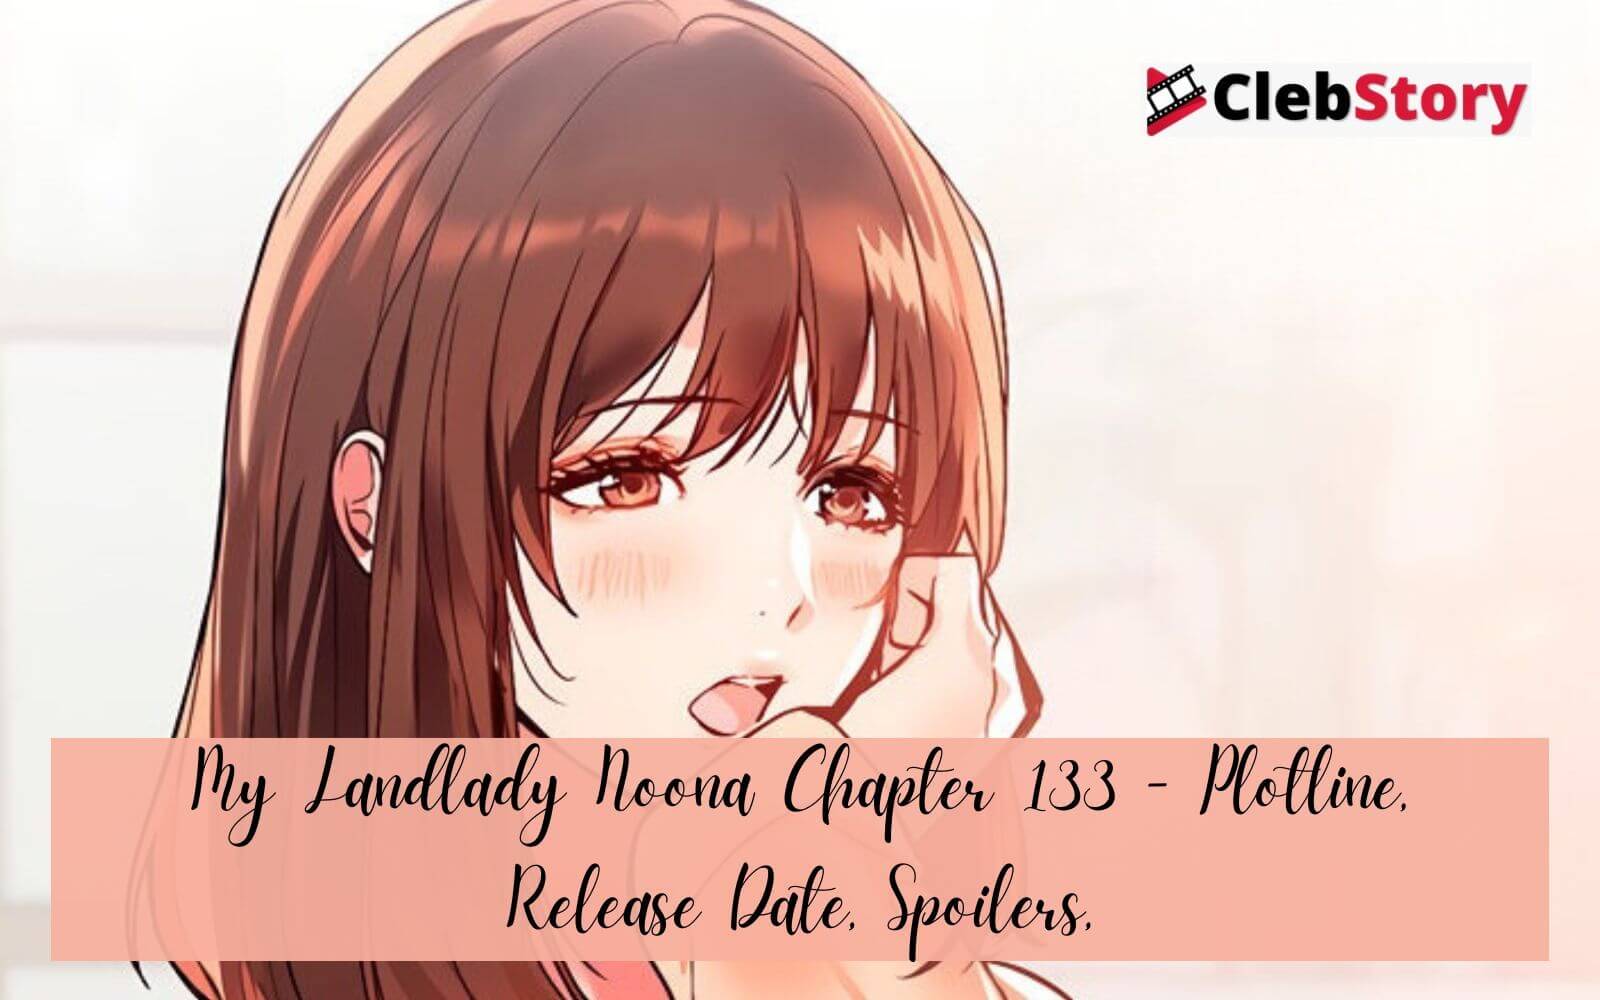 My Landlady Noona Chapter 133 Release Date, Plotline, Spoilers